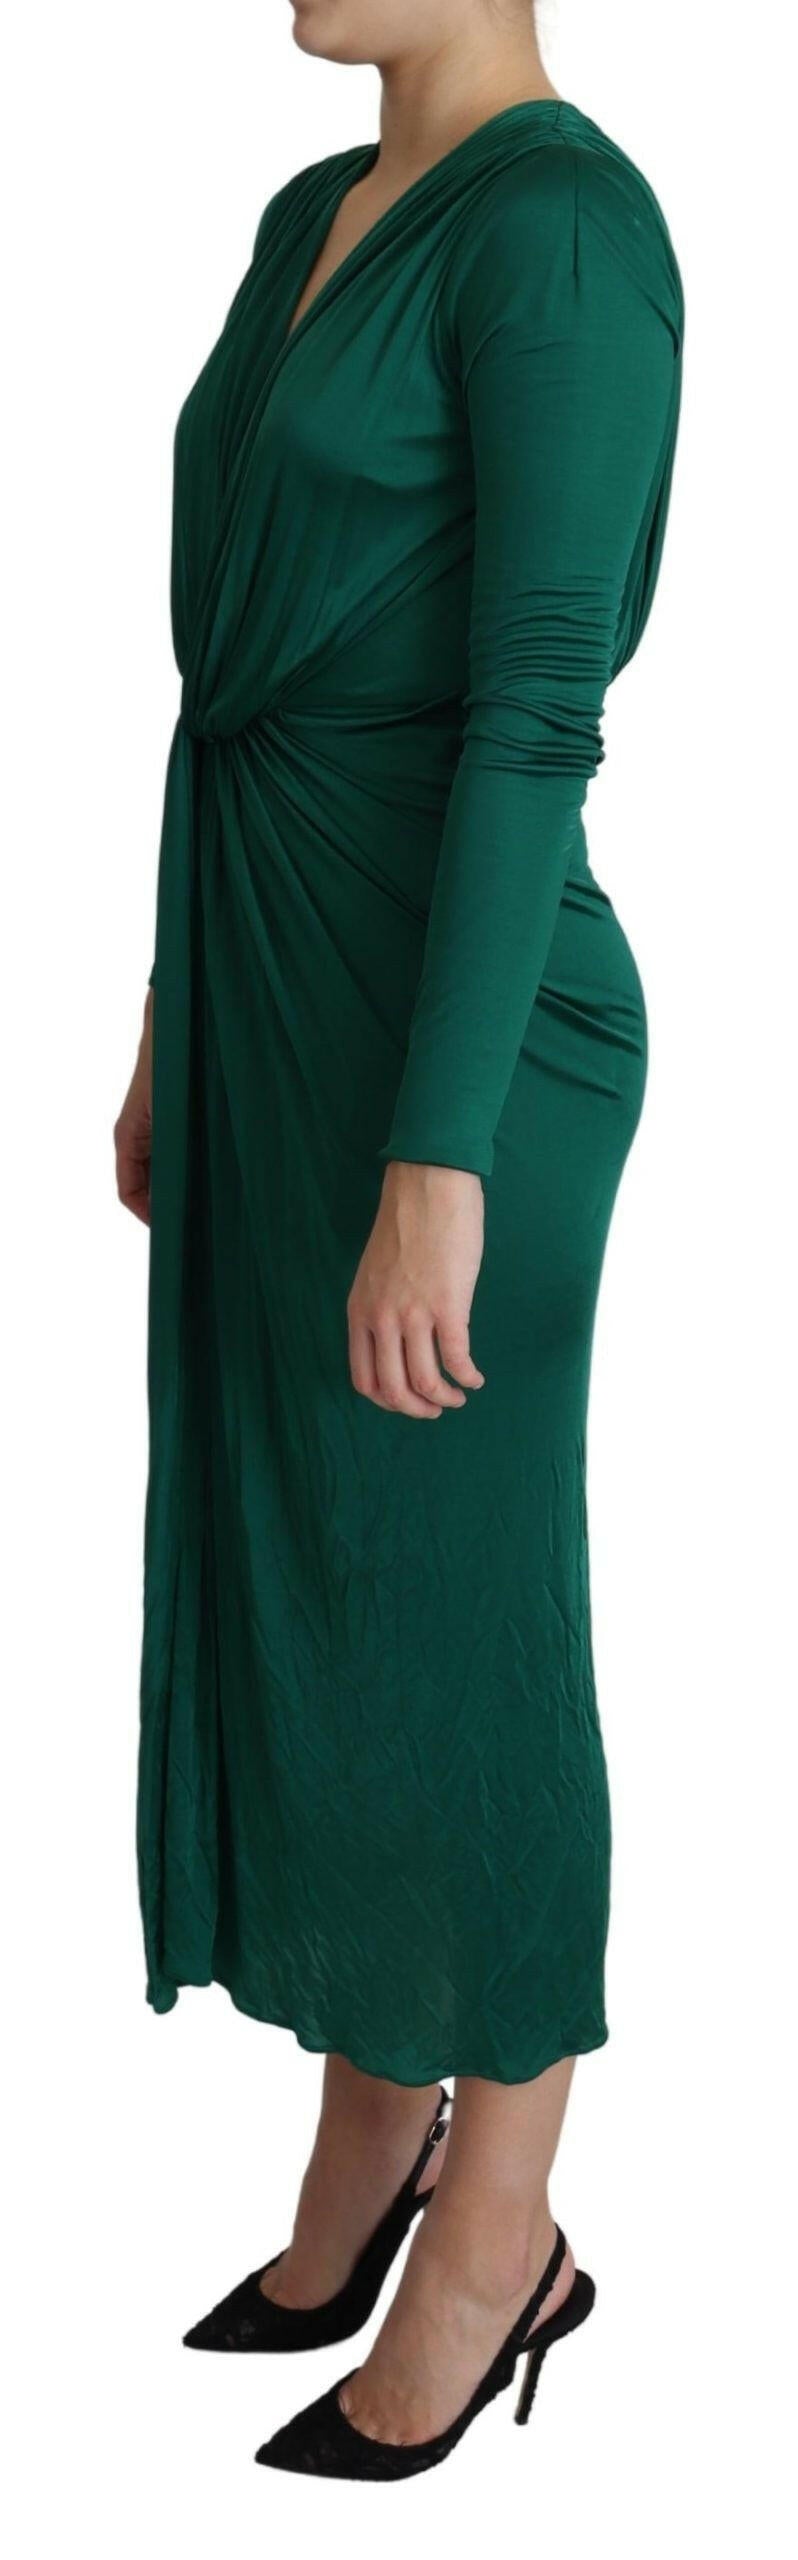 Dolce & Gabbana Green Fitted Silhouette Midi Viscose Dress - GENUINE AUTHENTIC BRAND LLC  